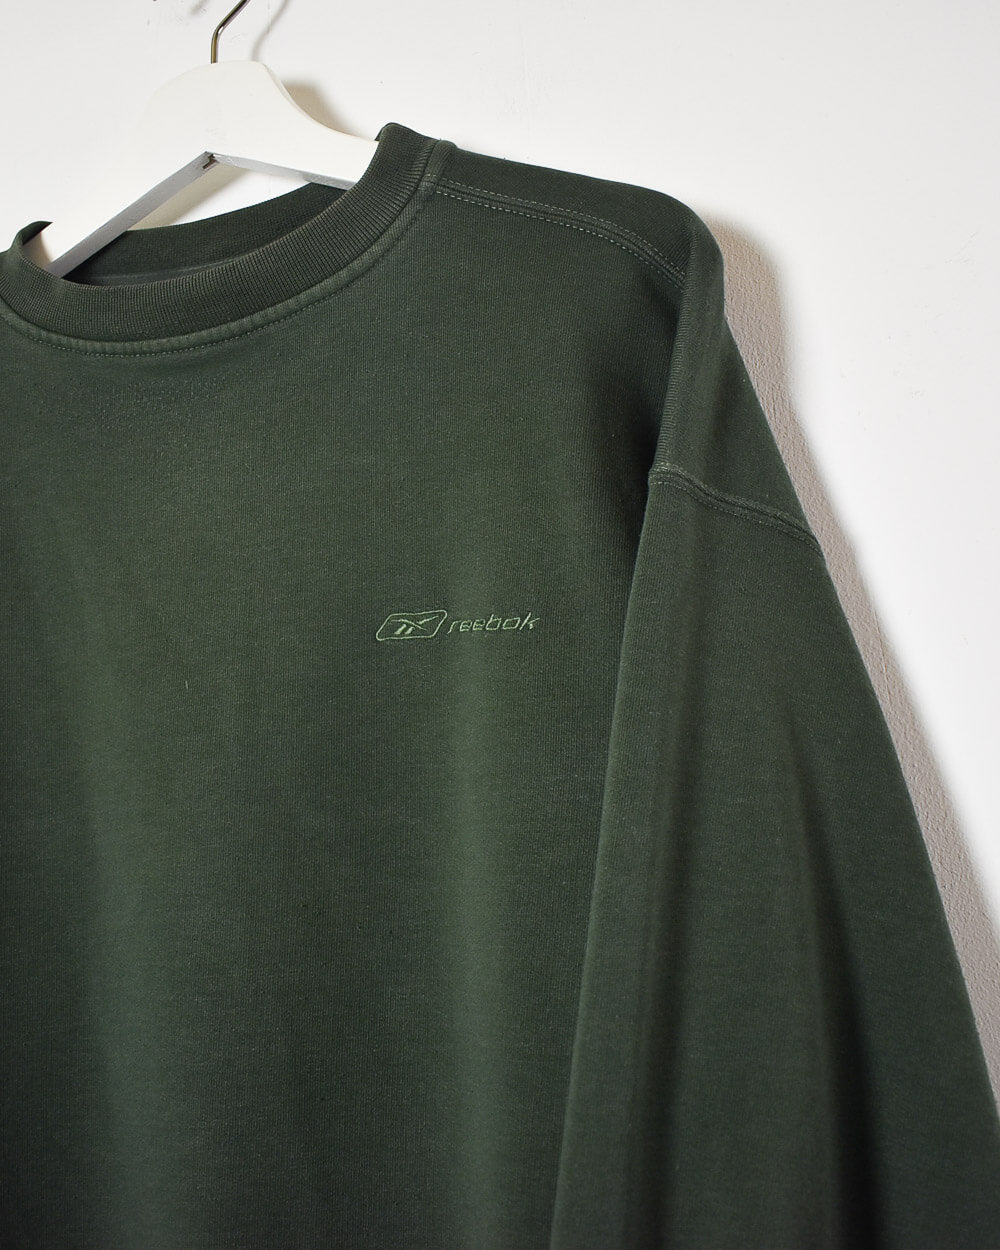 Green Reebok Sweatshirt - Medium